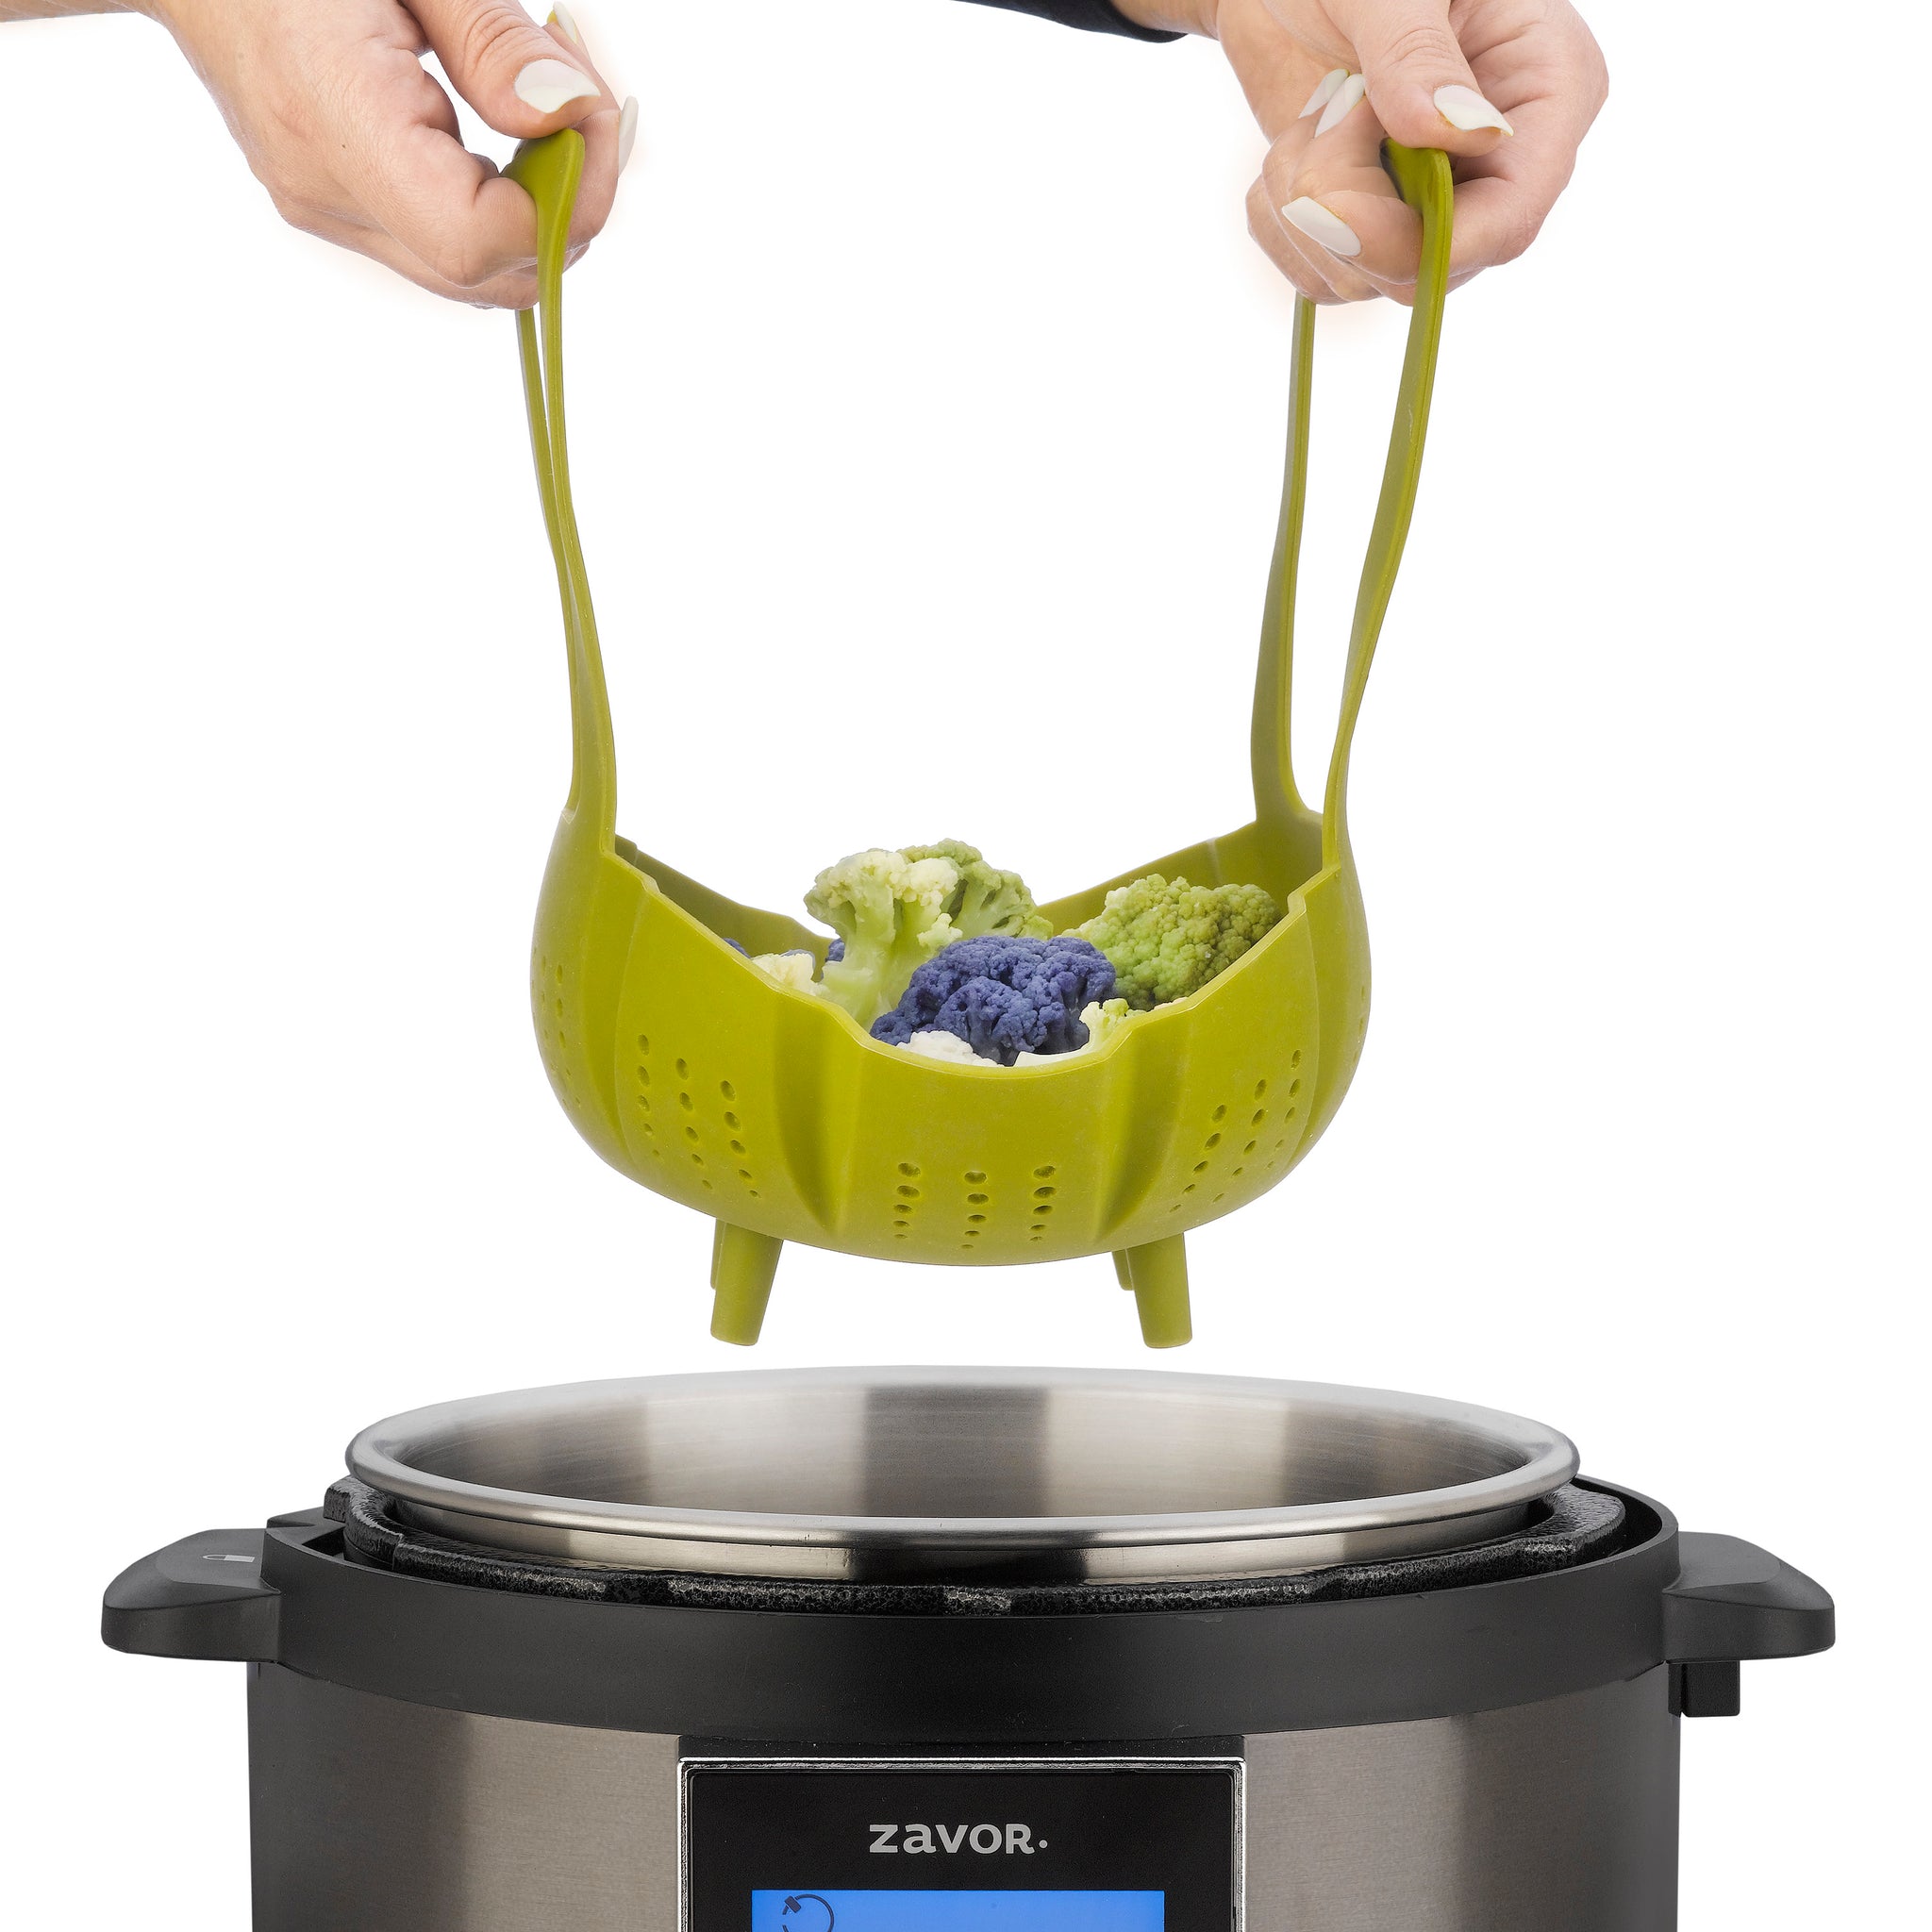 Matfer 013230 Steamer Basket For Pressure Cooker Model #